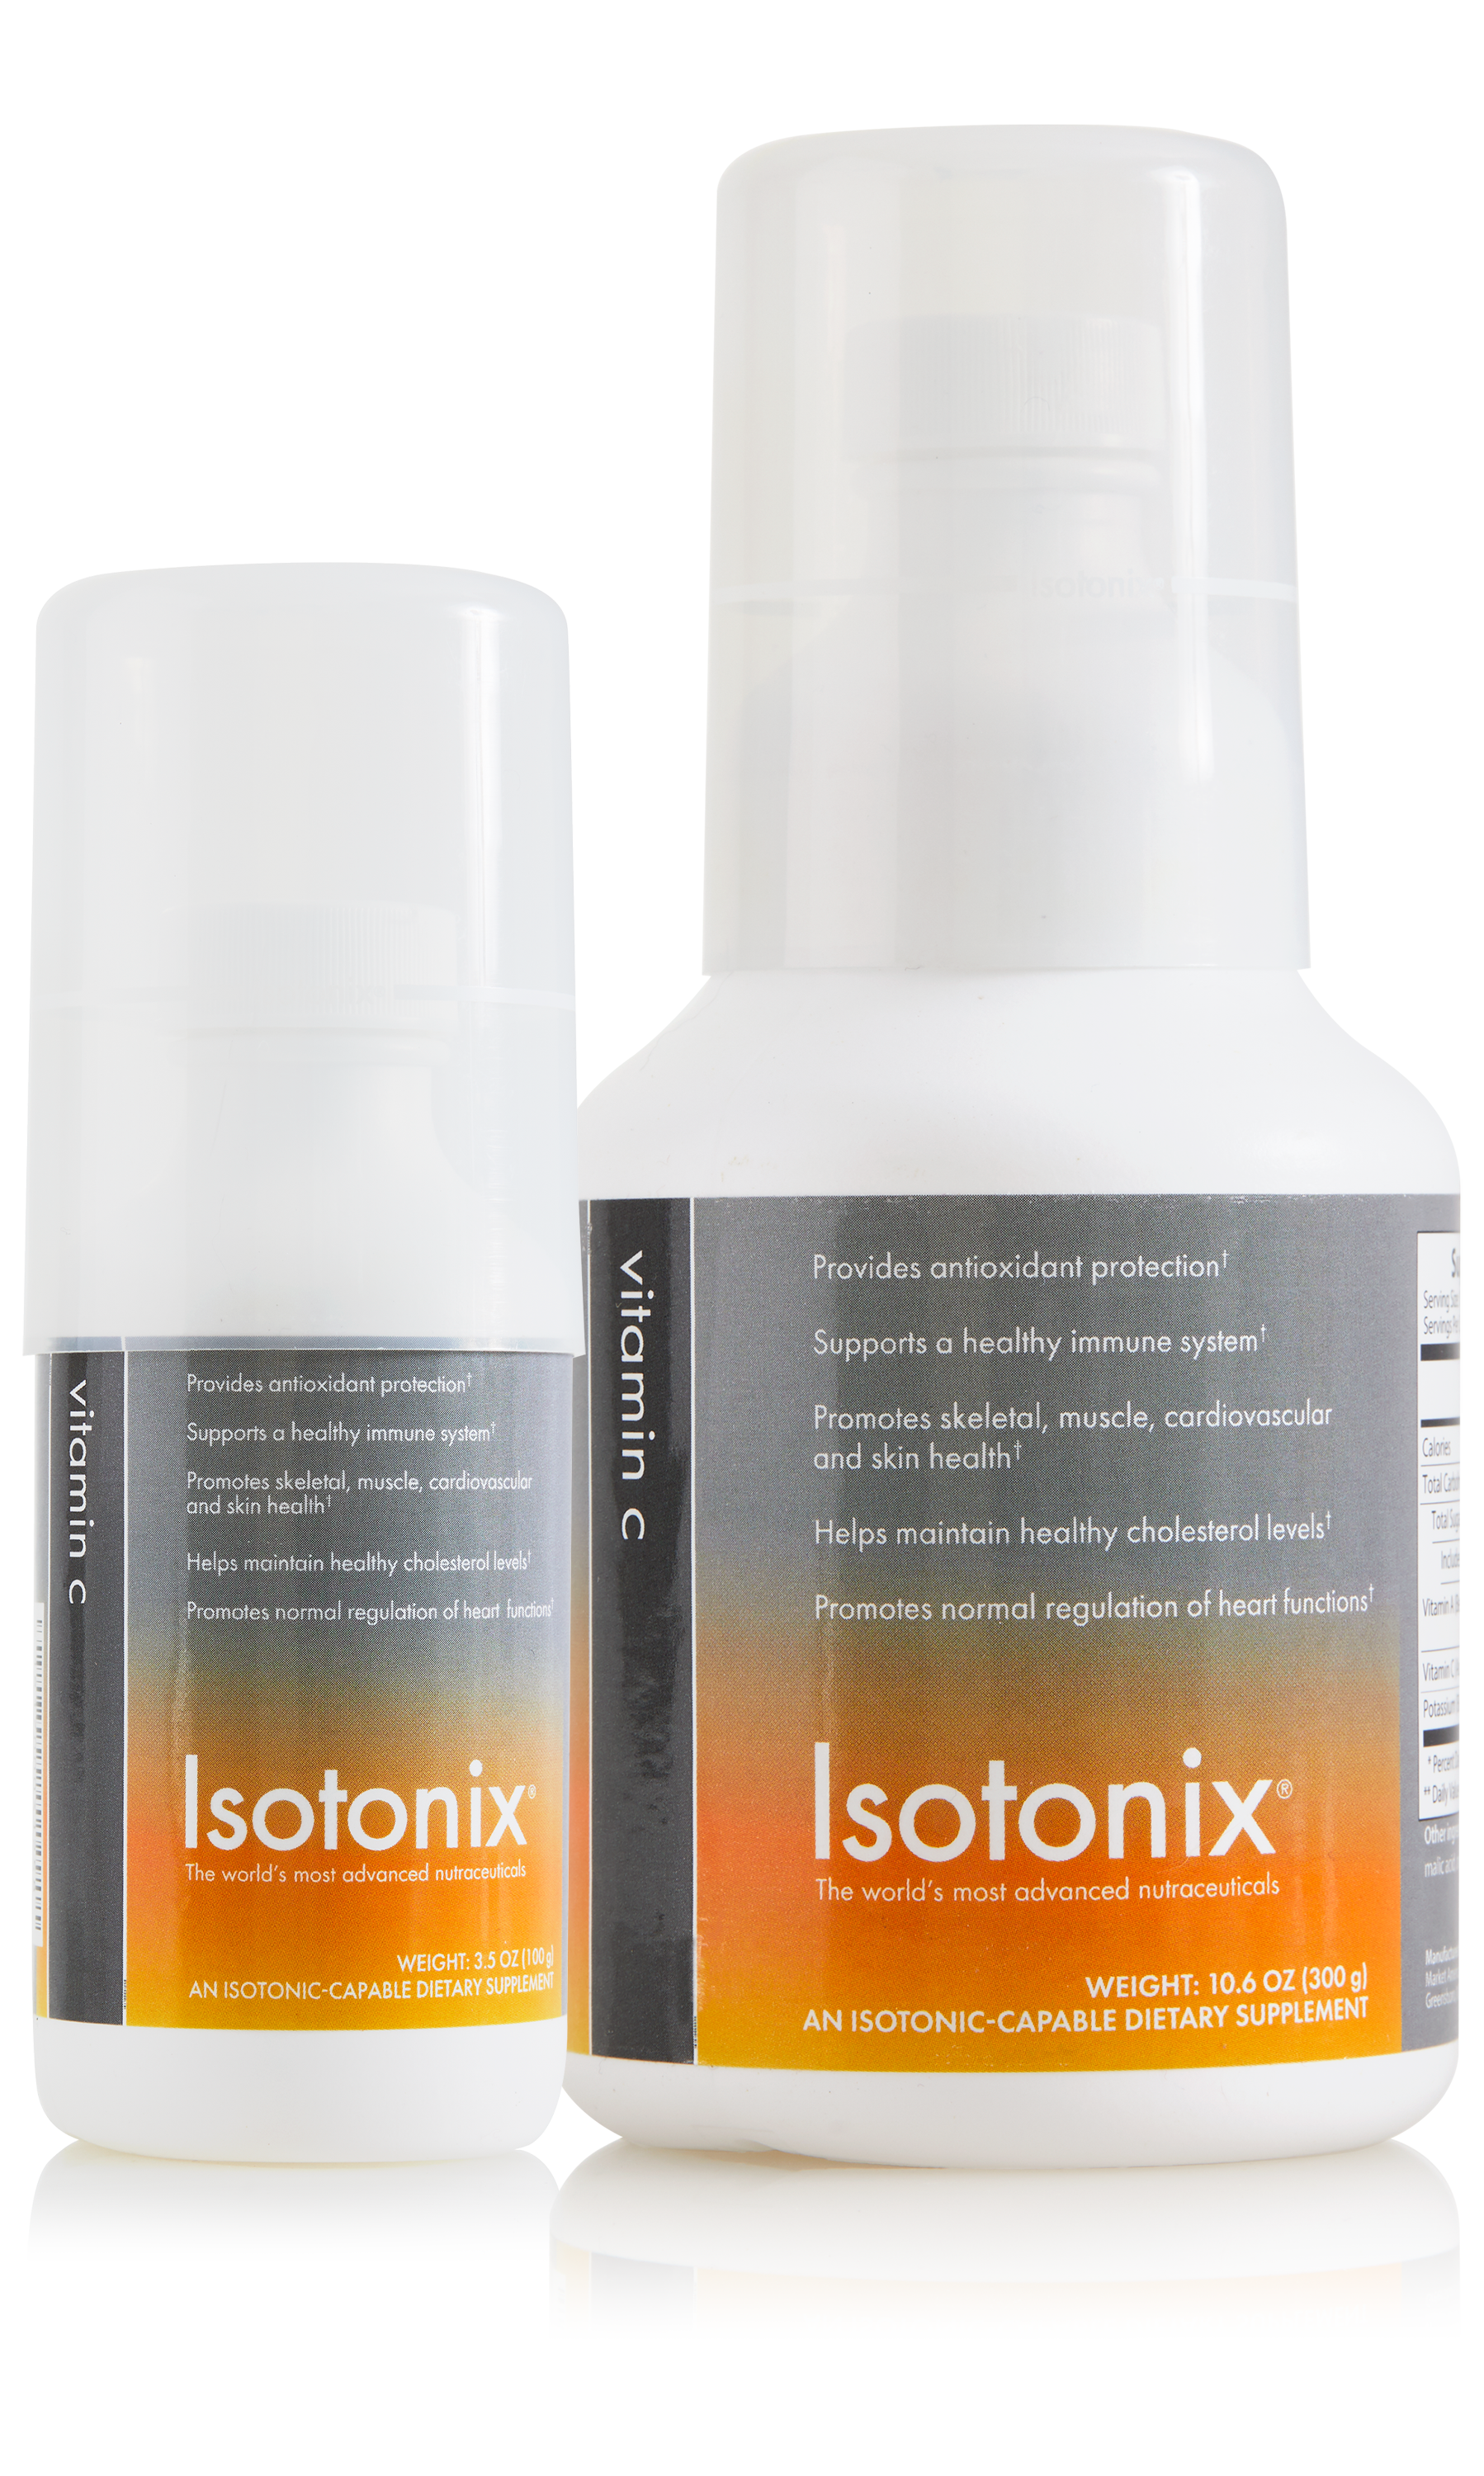 Isotonix Vitamin C product bottles